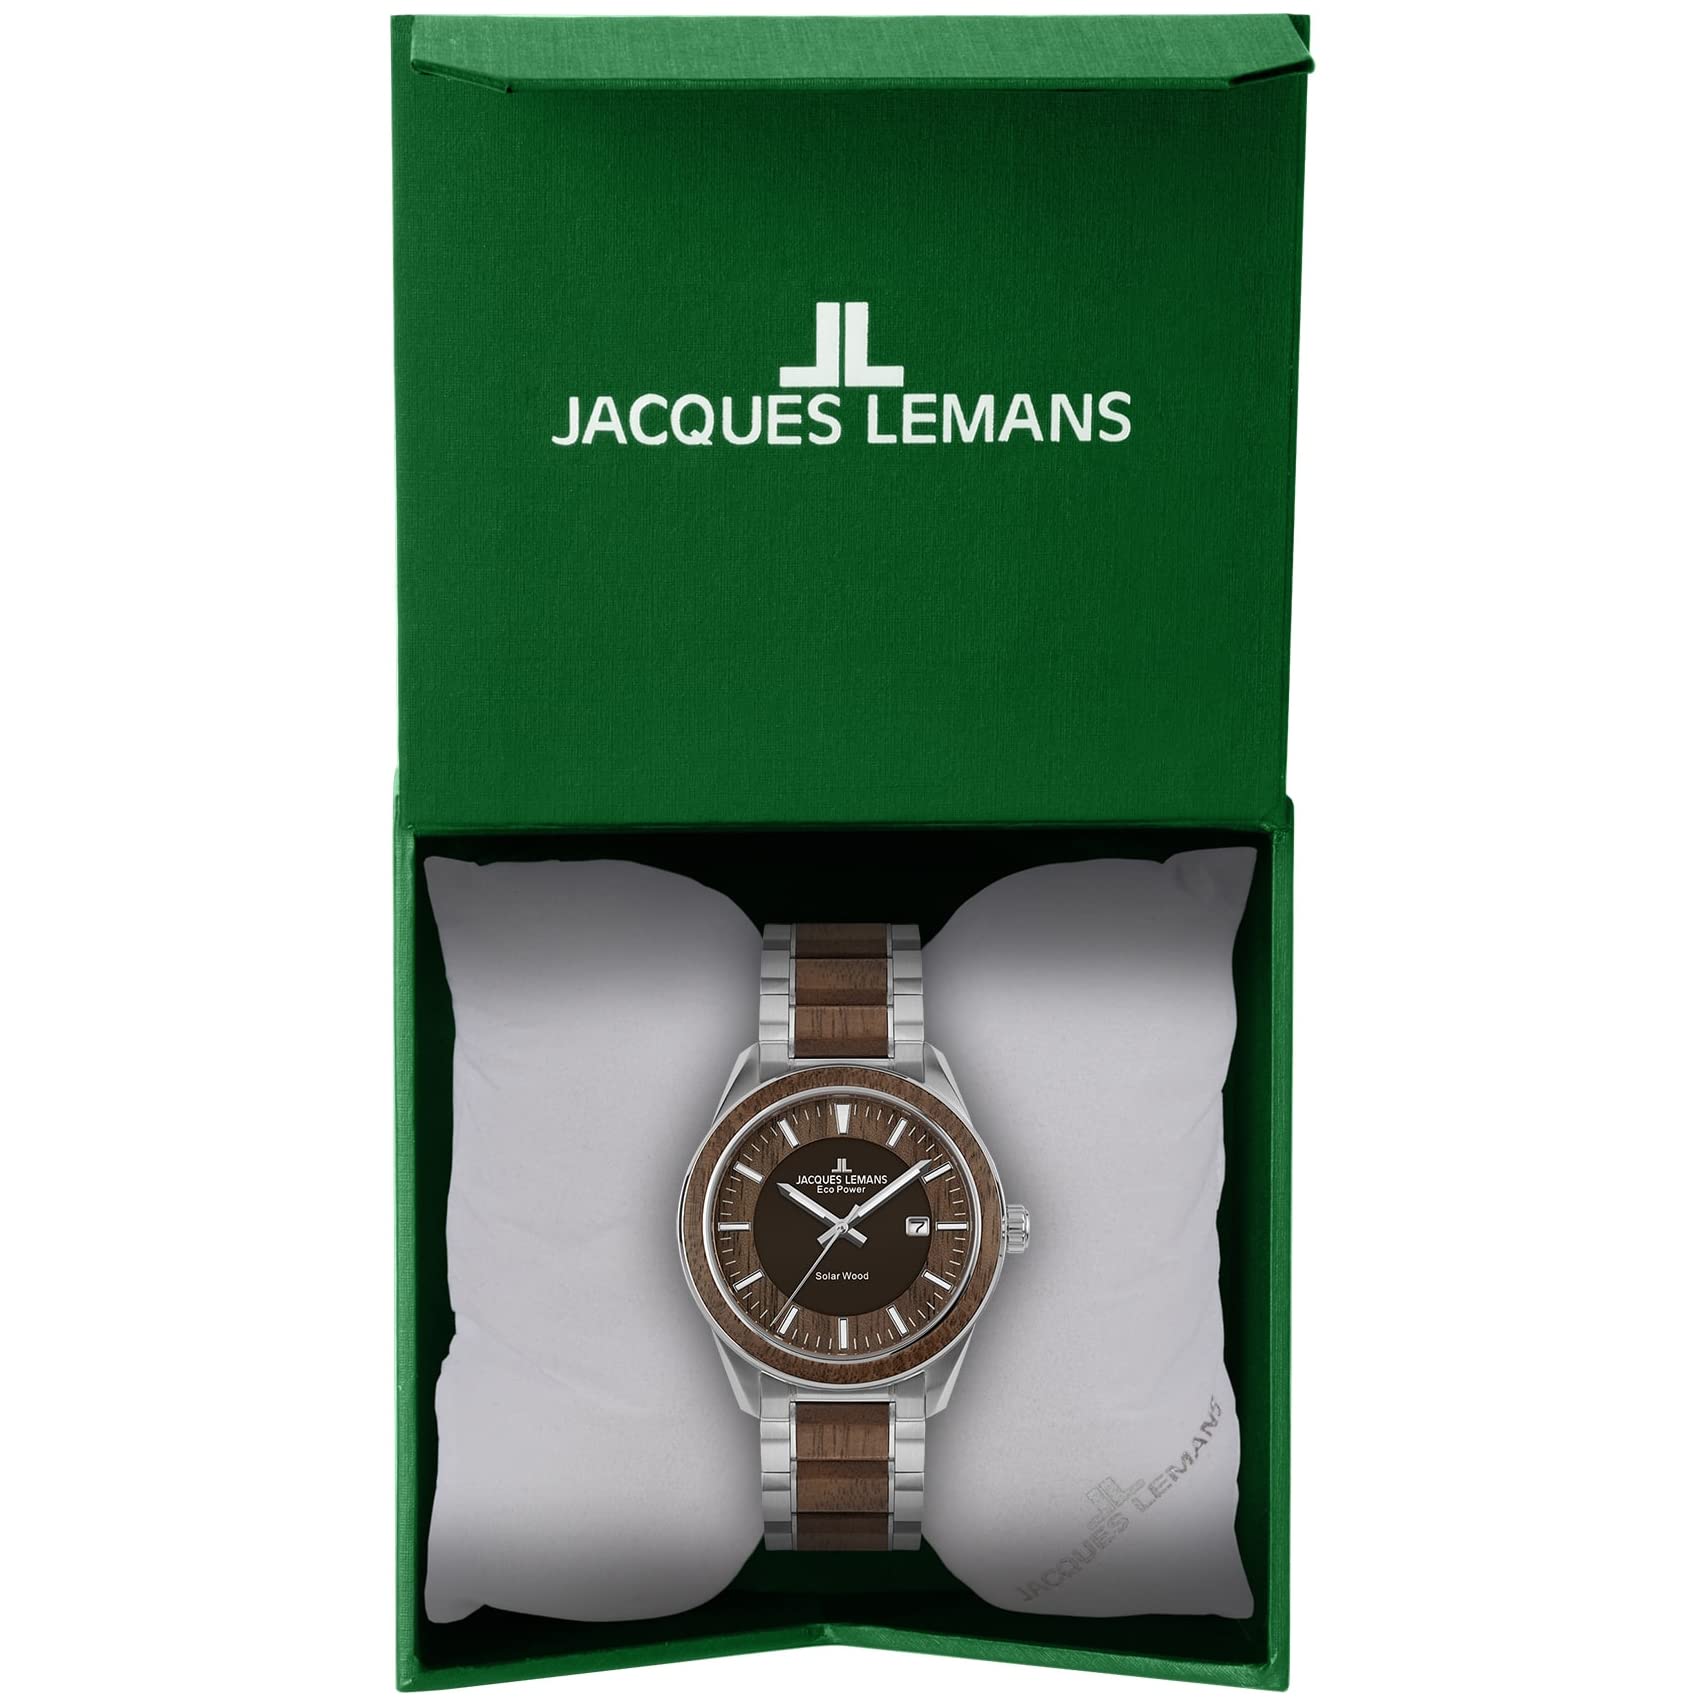 JACQUES LEMANS Herrenuhr, Eco Power Uhren Männer, Chronograph aus massivem Edelstahl mit Apfel-Leder Armband, Model 1-2116